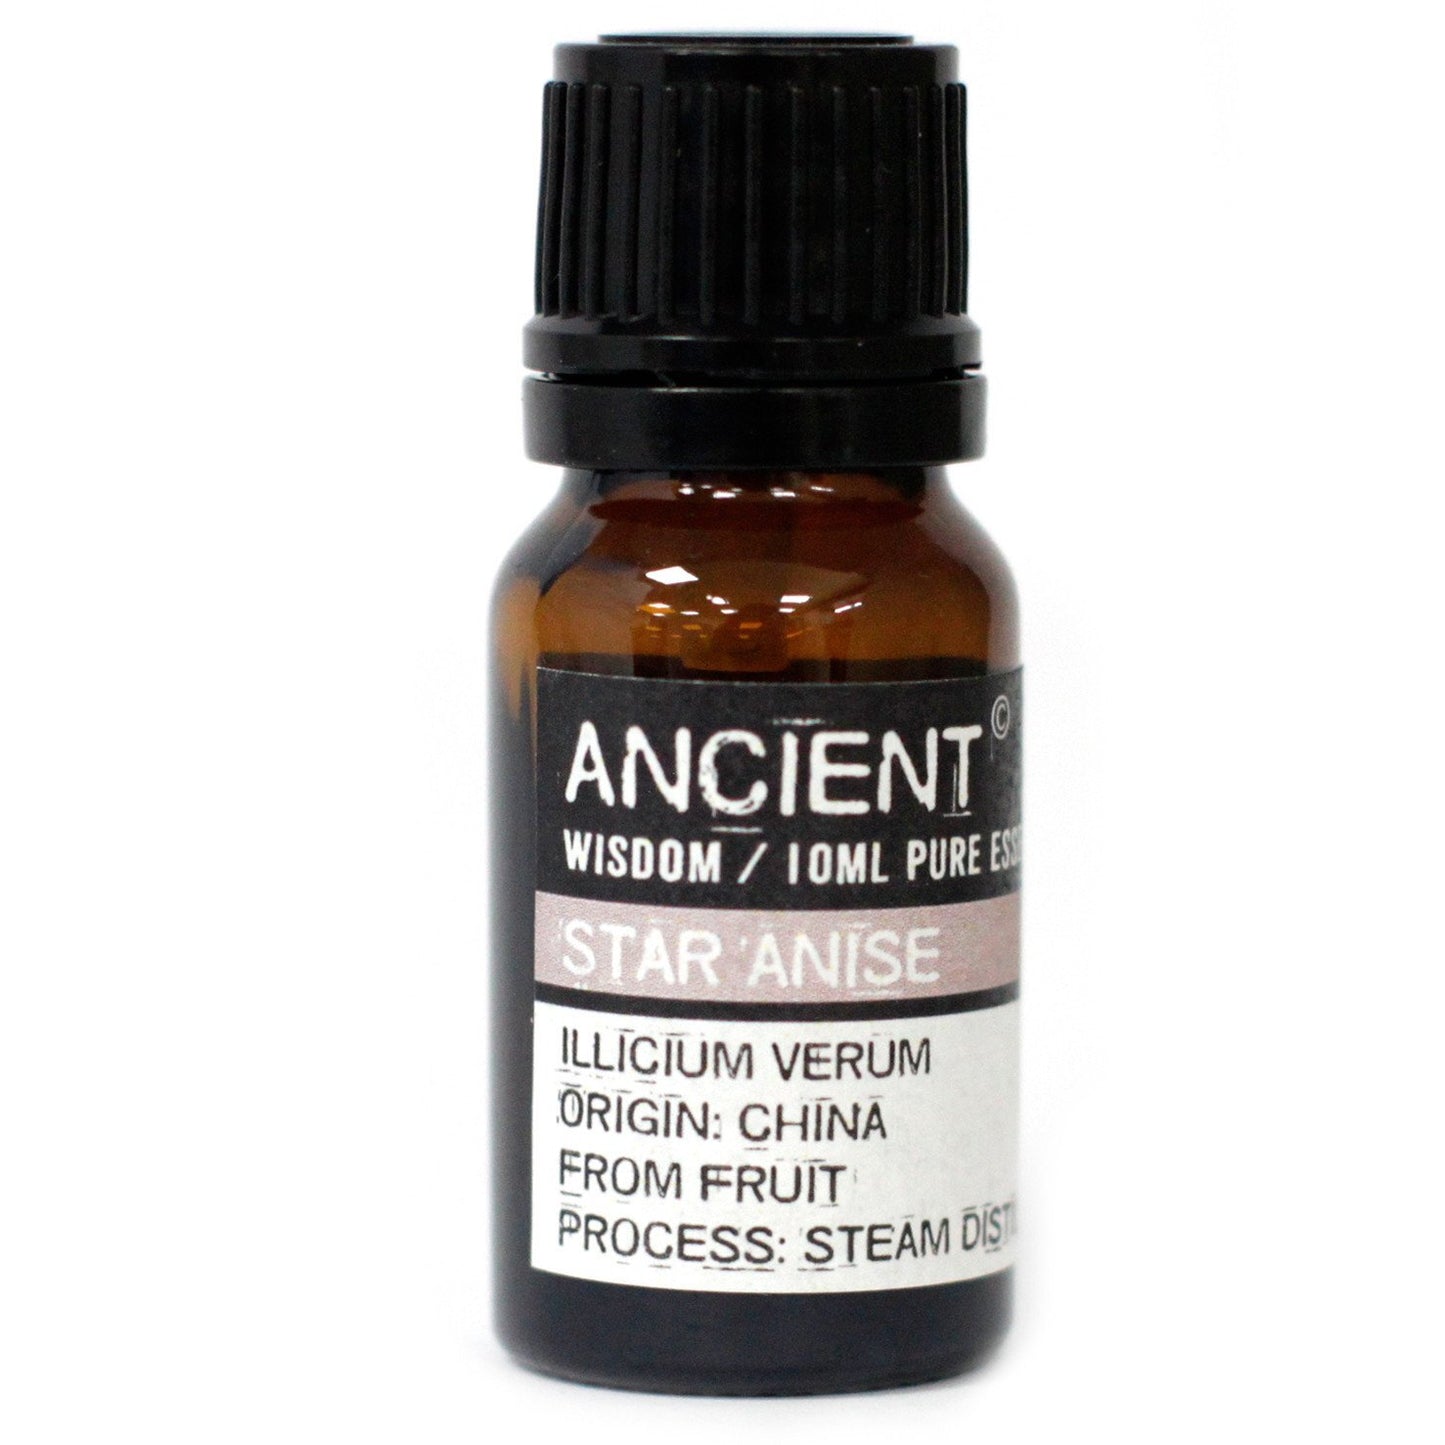 Star Anise essential oil 10ml